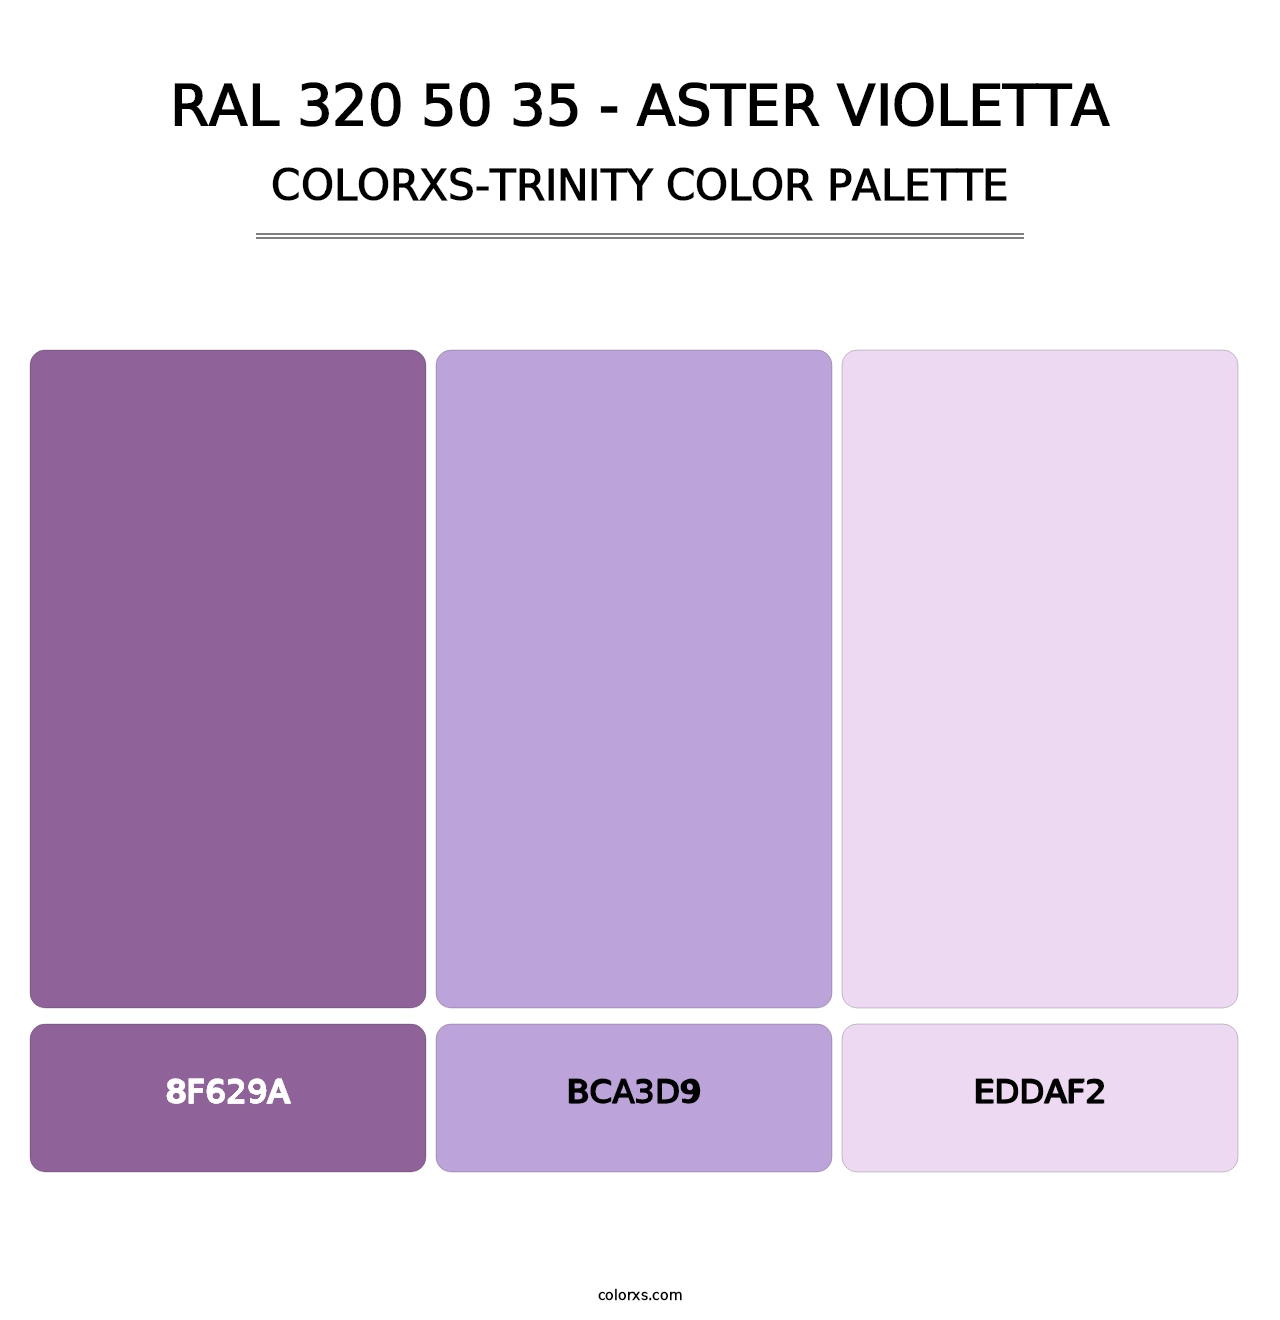 RAL 320 50 35 - Aster Violetta - Colorxs Trinity Palette